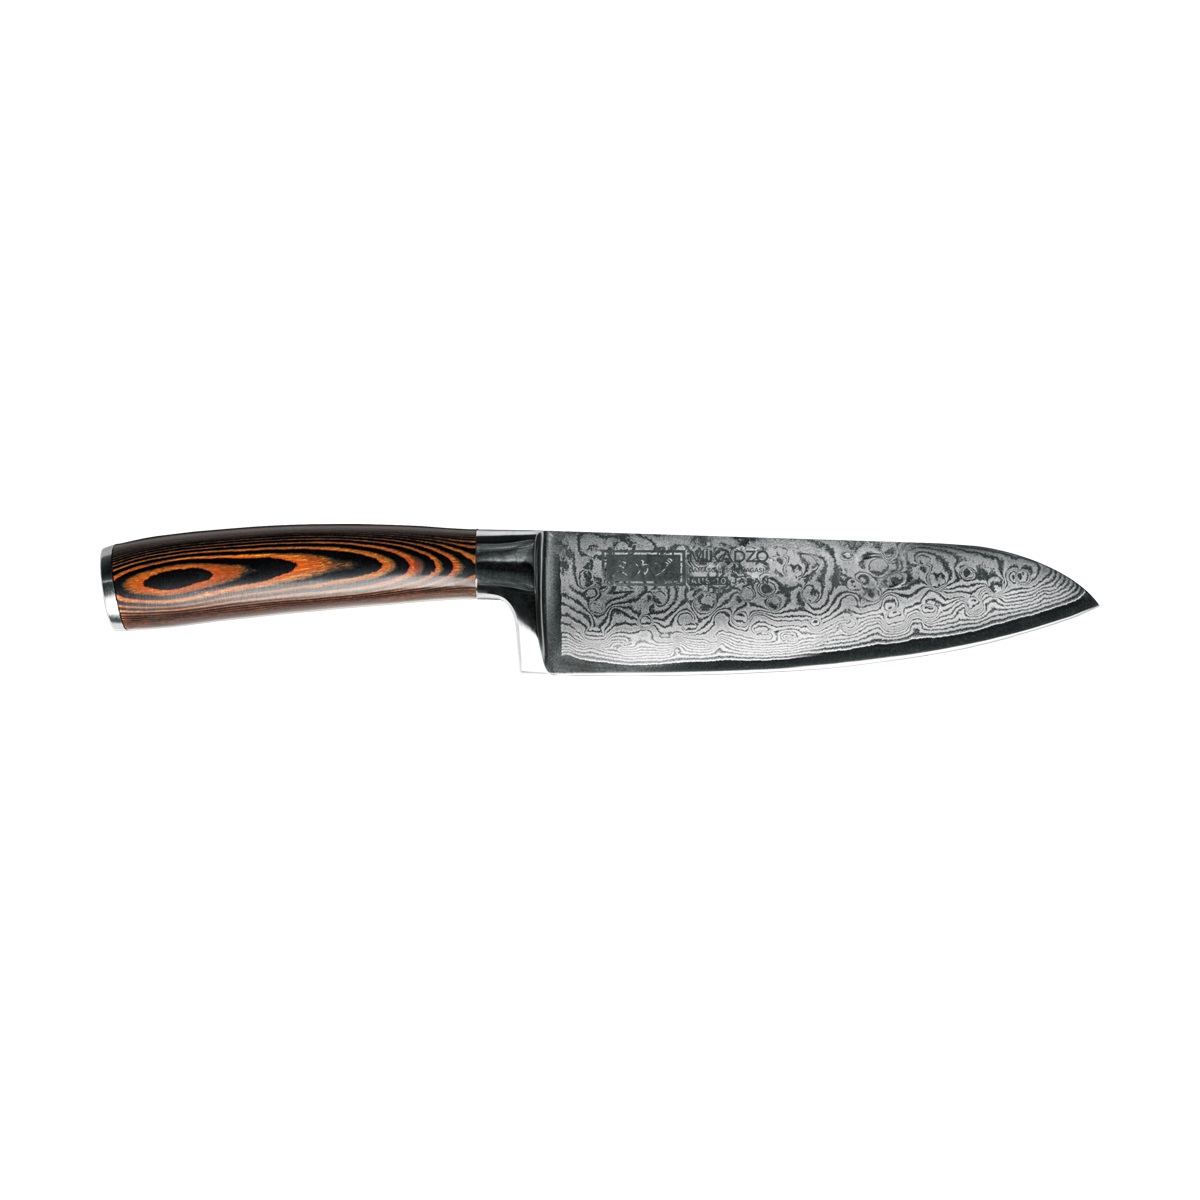 Кухонный нож Omoikiri Damascus Suminagashi 4996235 кухонный гаджет ownland m 791 5 в 1